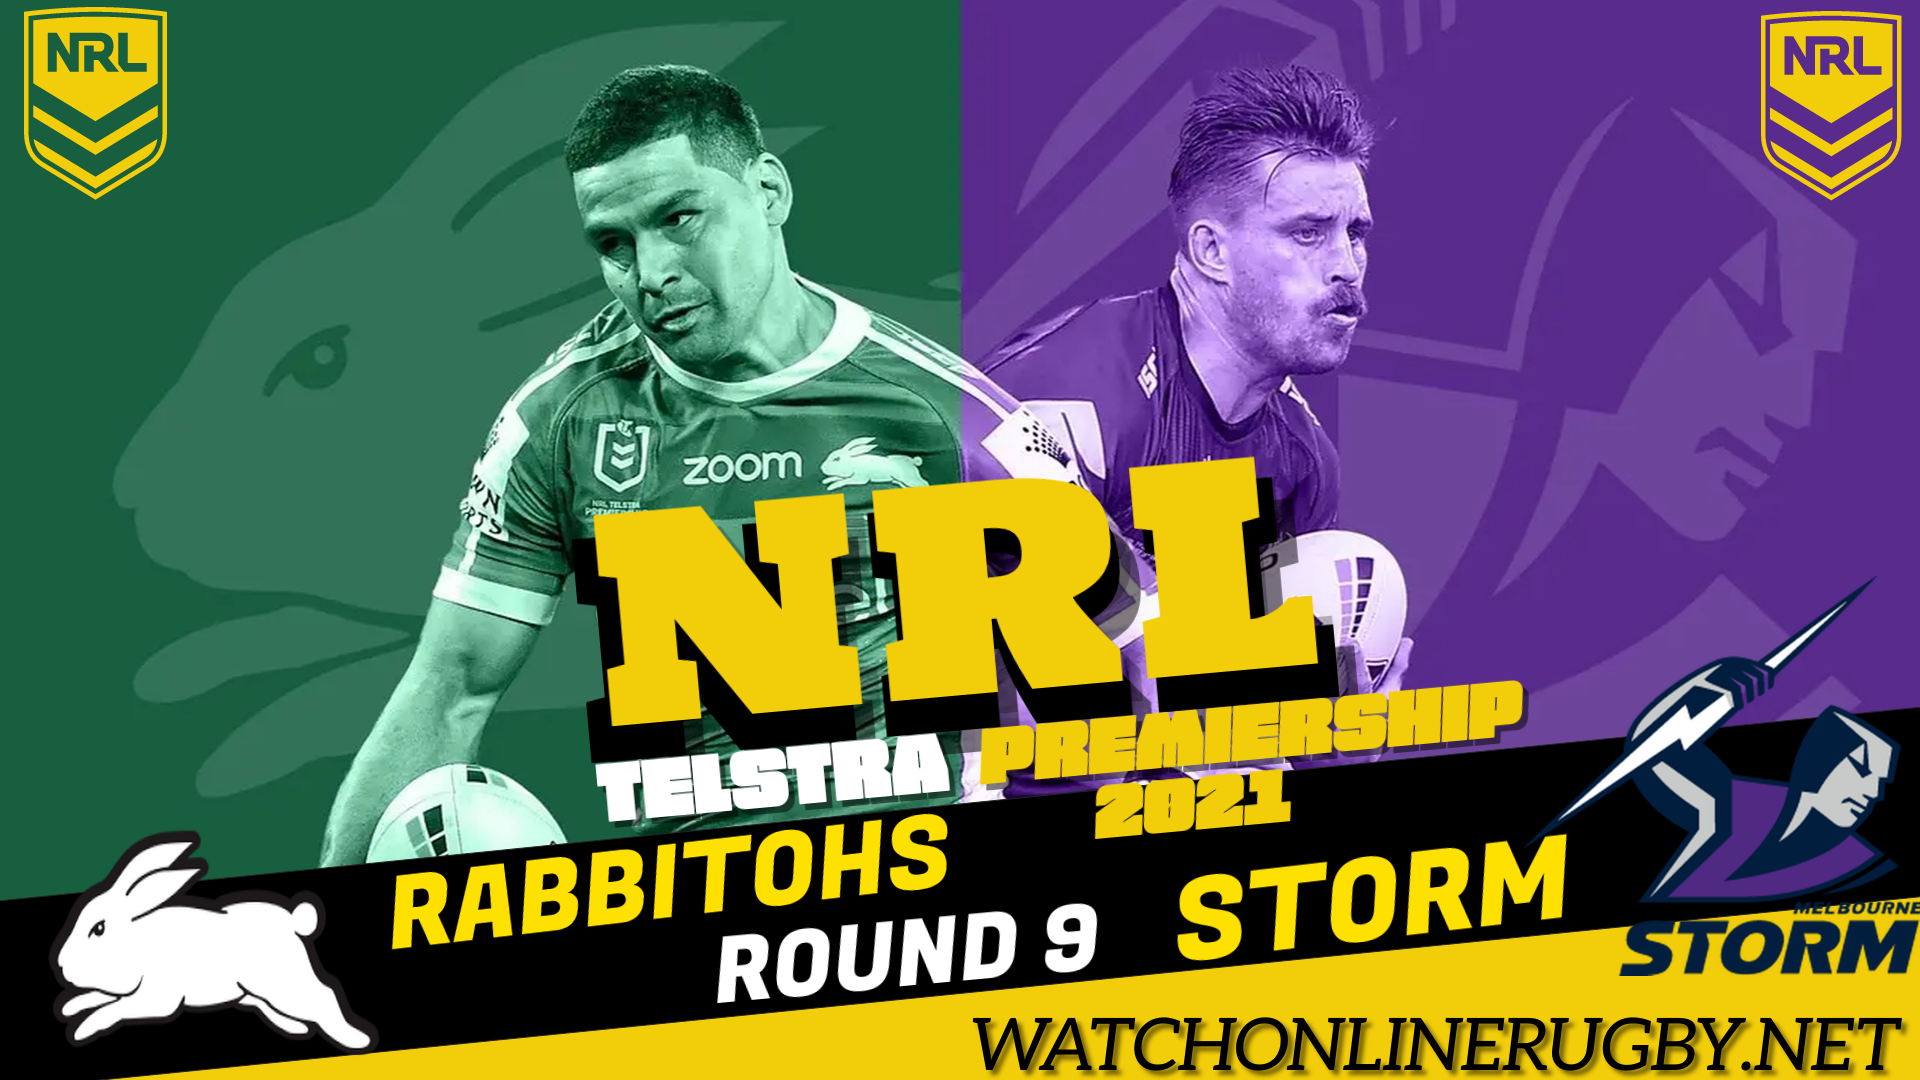 rabbitohs-vs-storm-live-streaming-nrl-2018